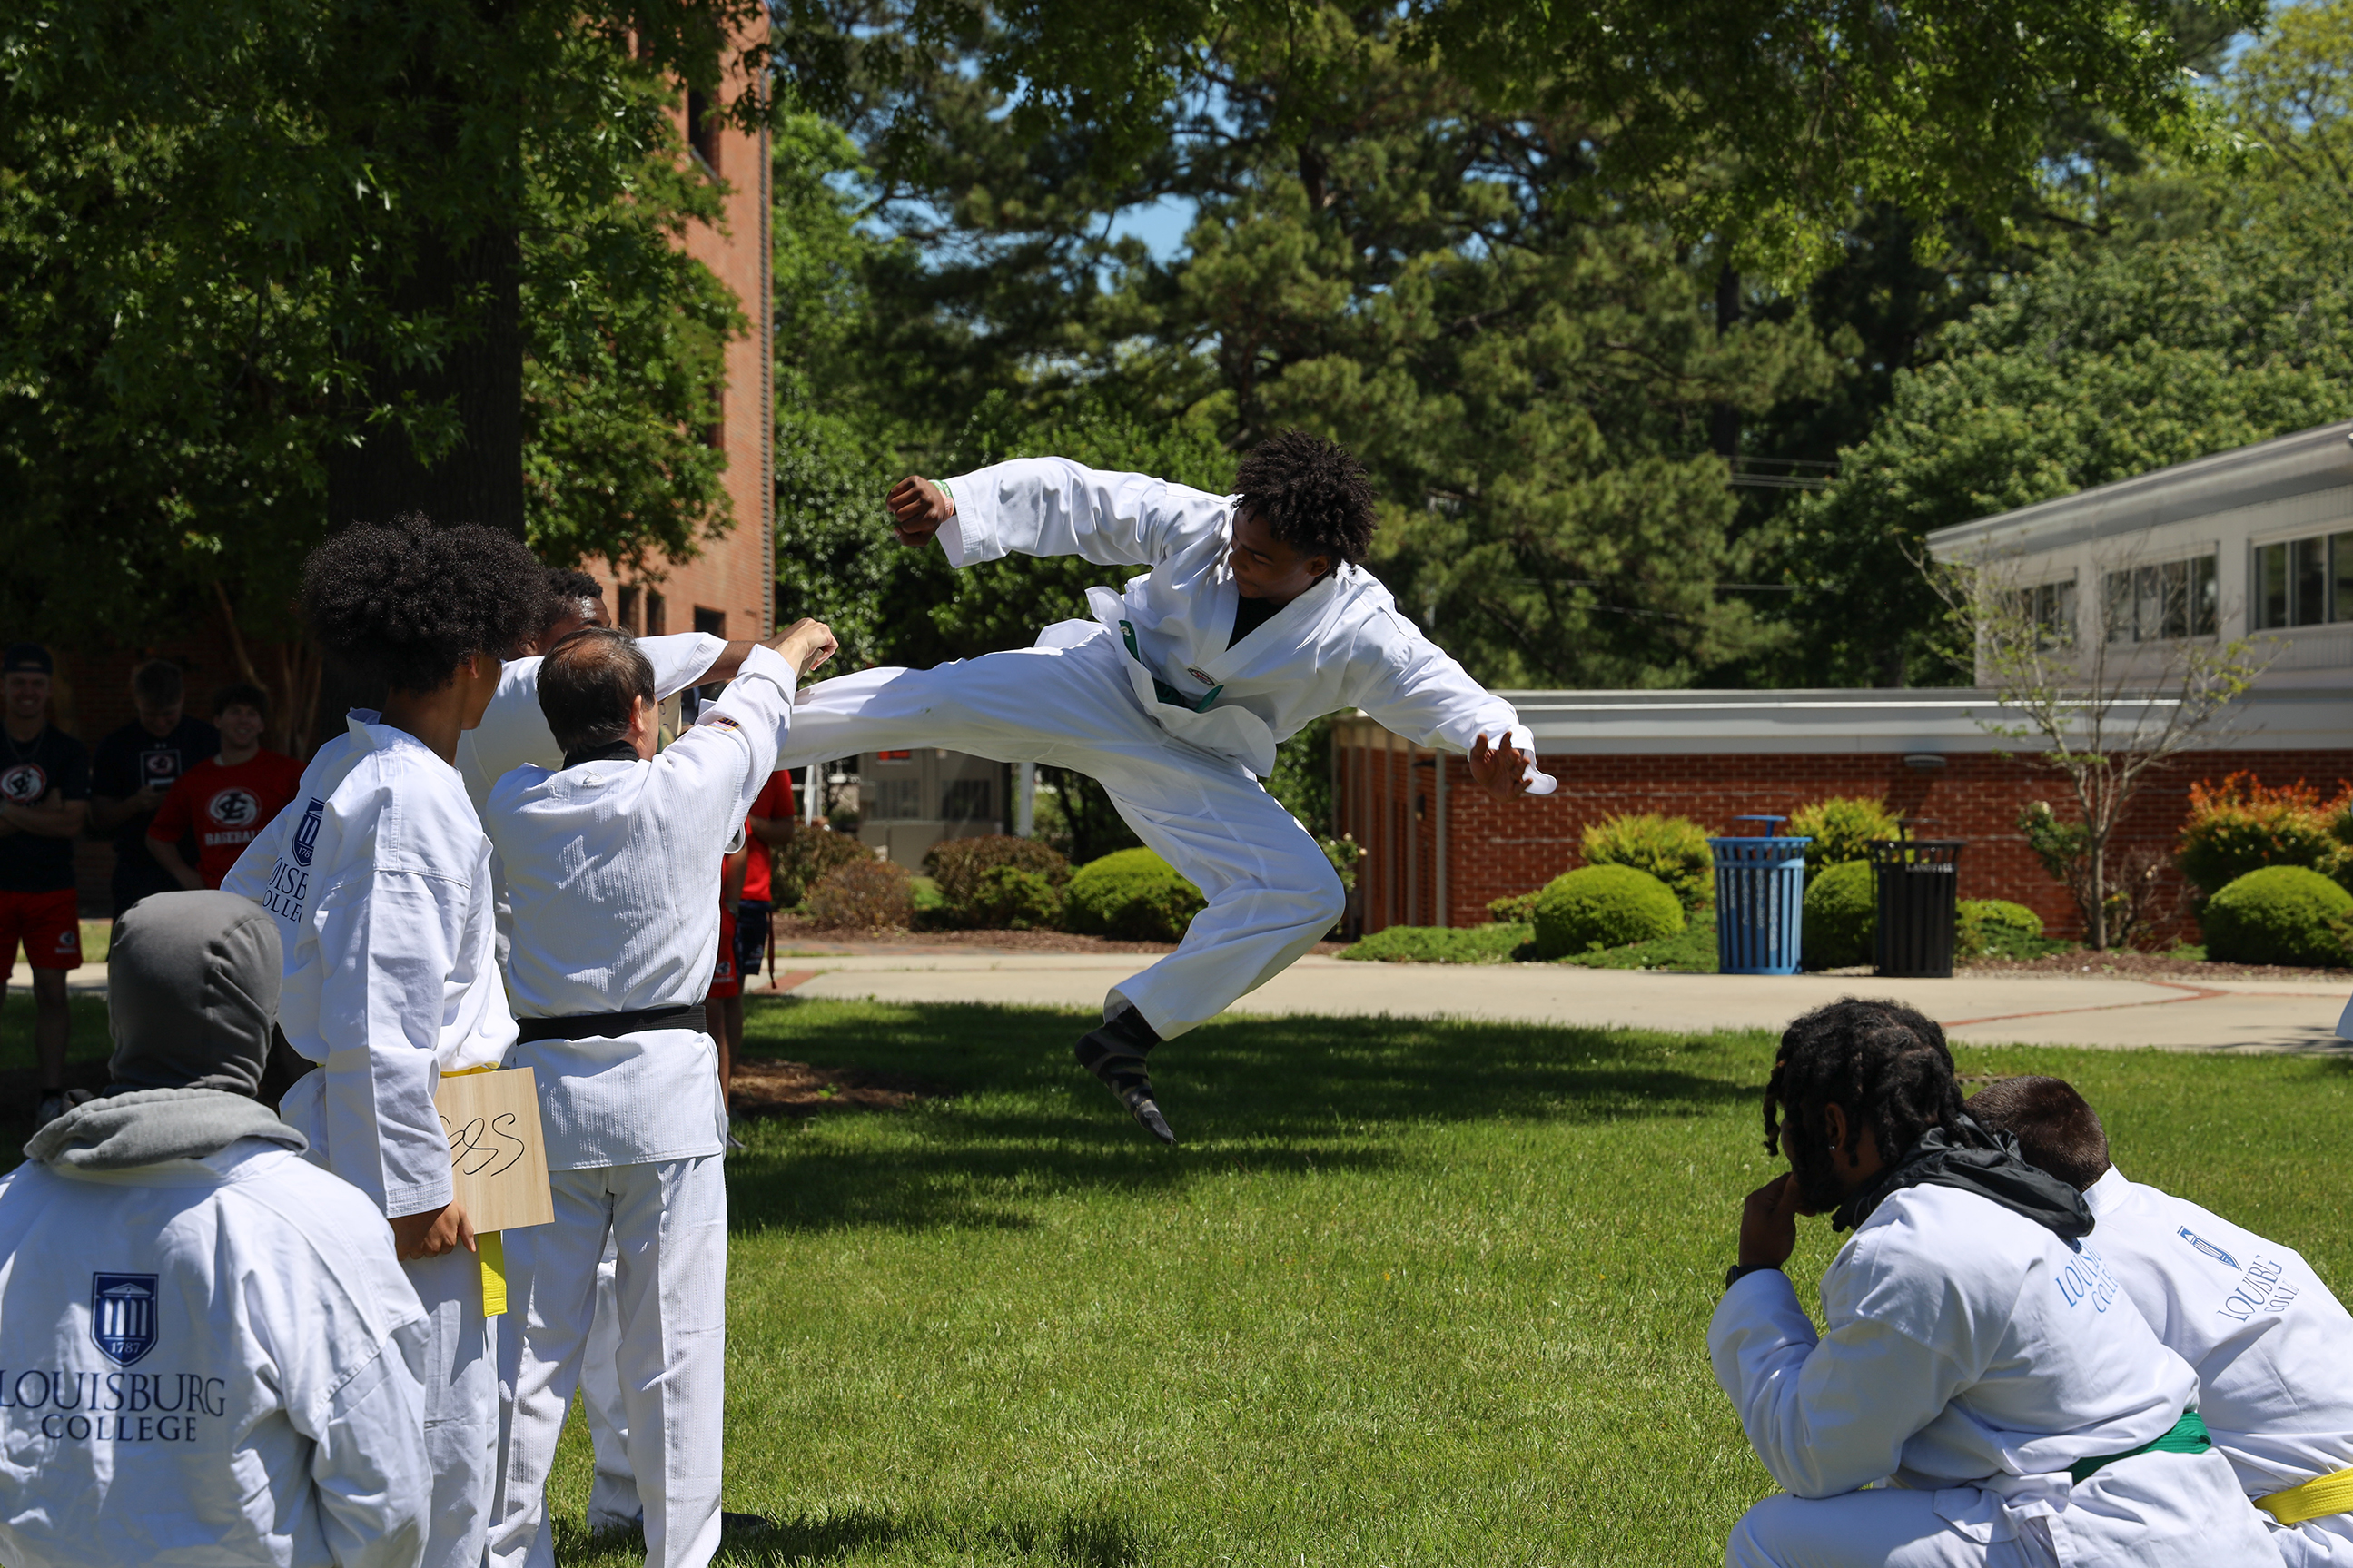 PED 125 Taekwondo presentation, student kicking board.